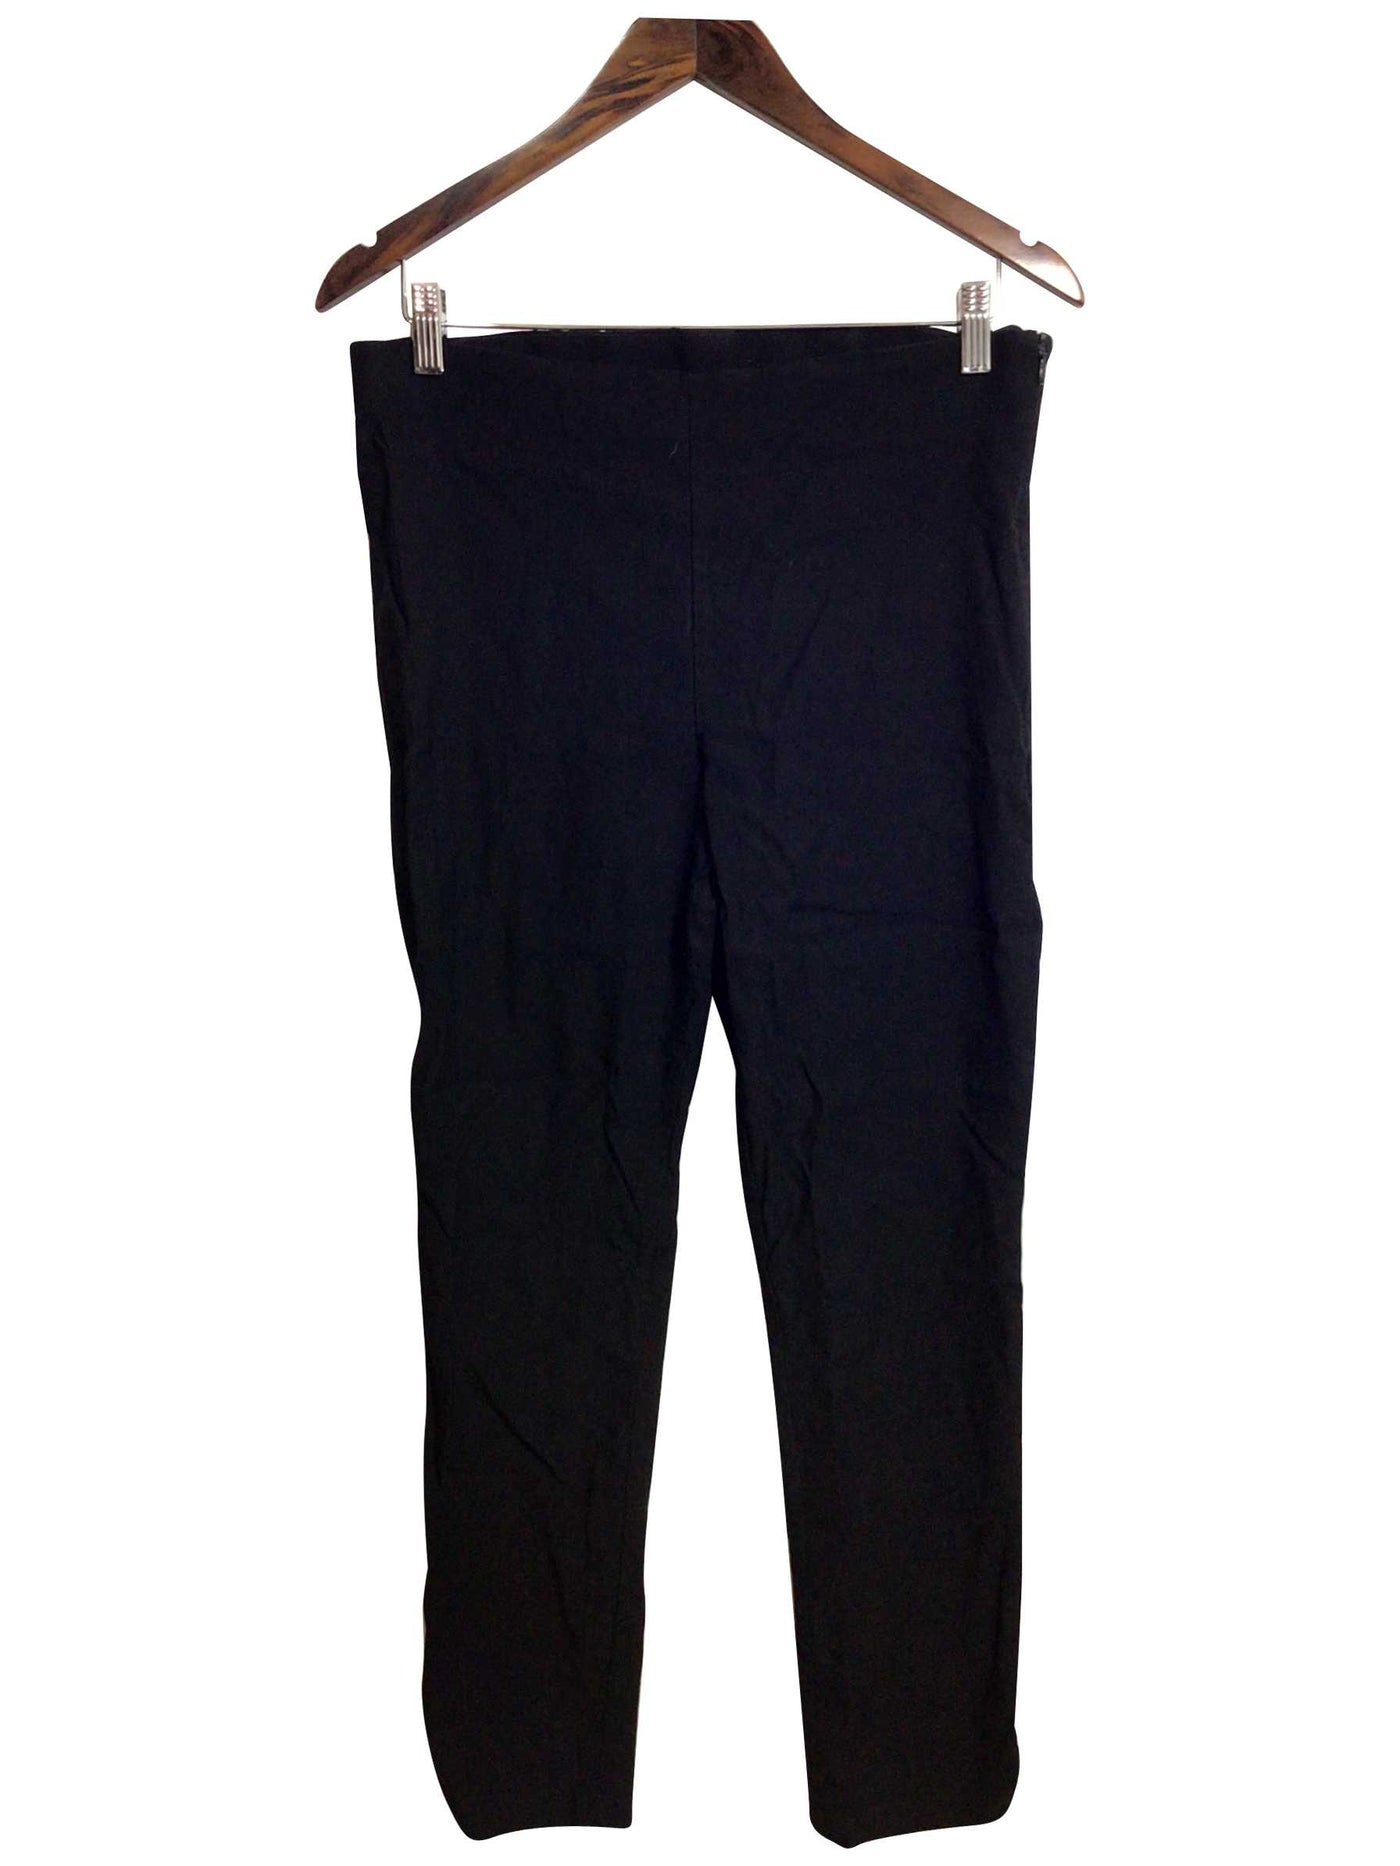 JOE FRESH Regular fit Pant in Black - Size 12 | 14 $ KOOP